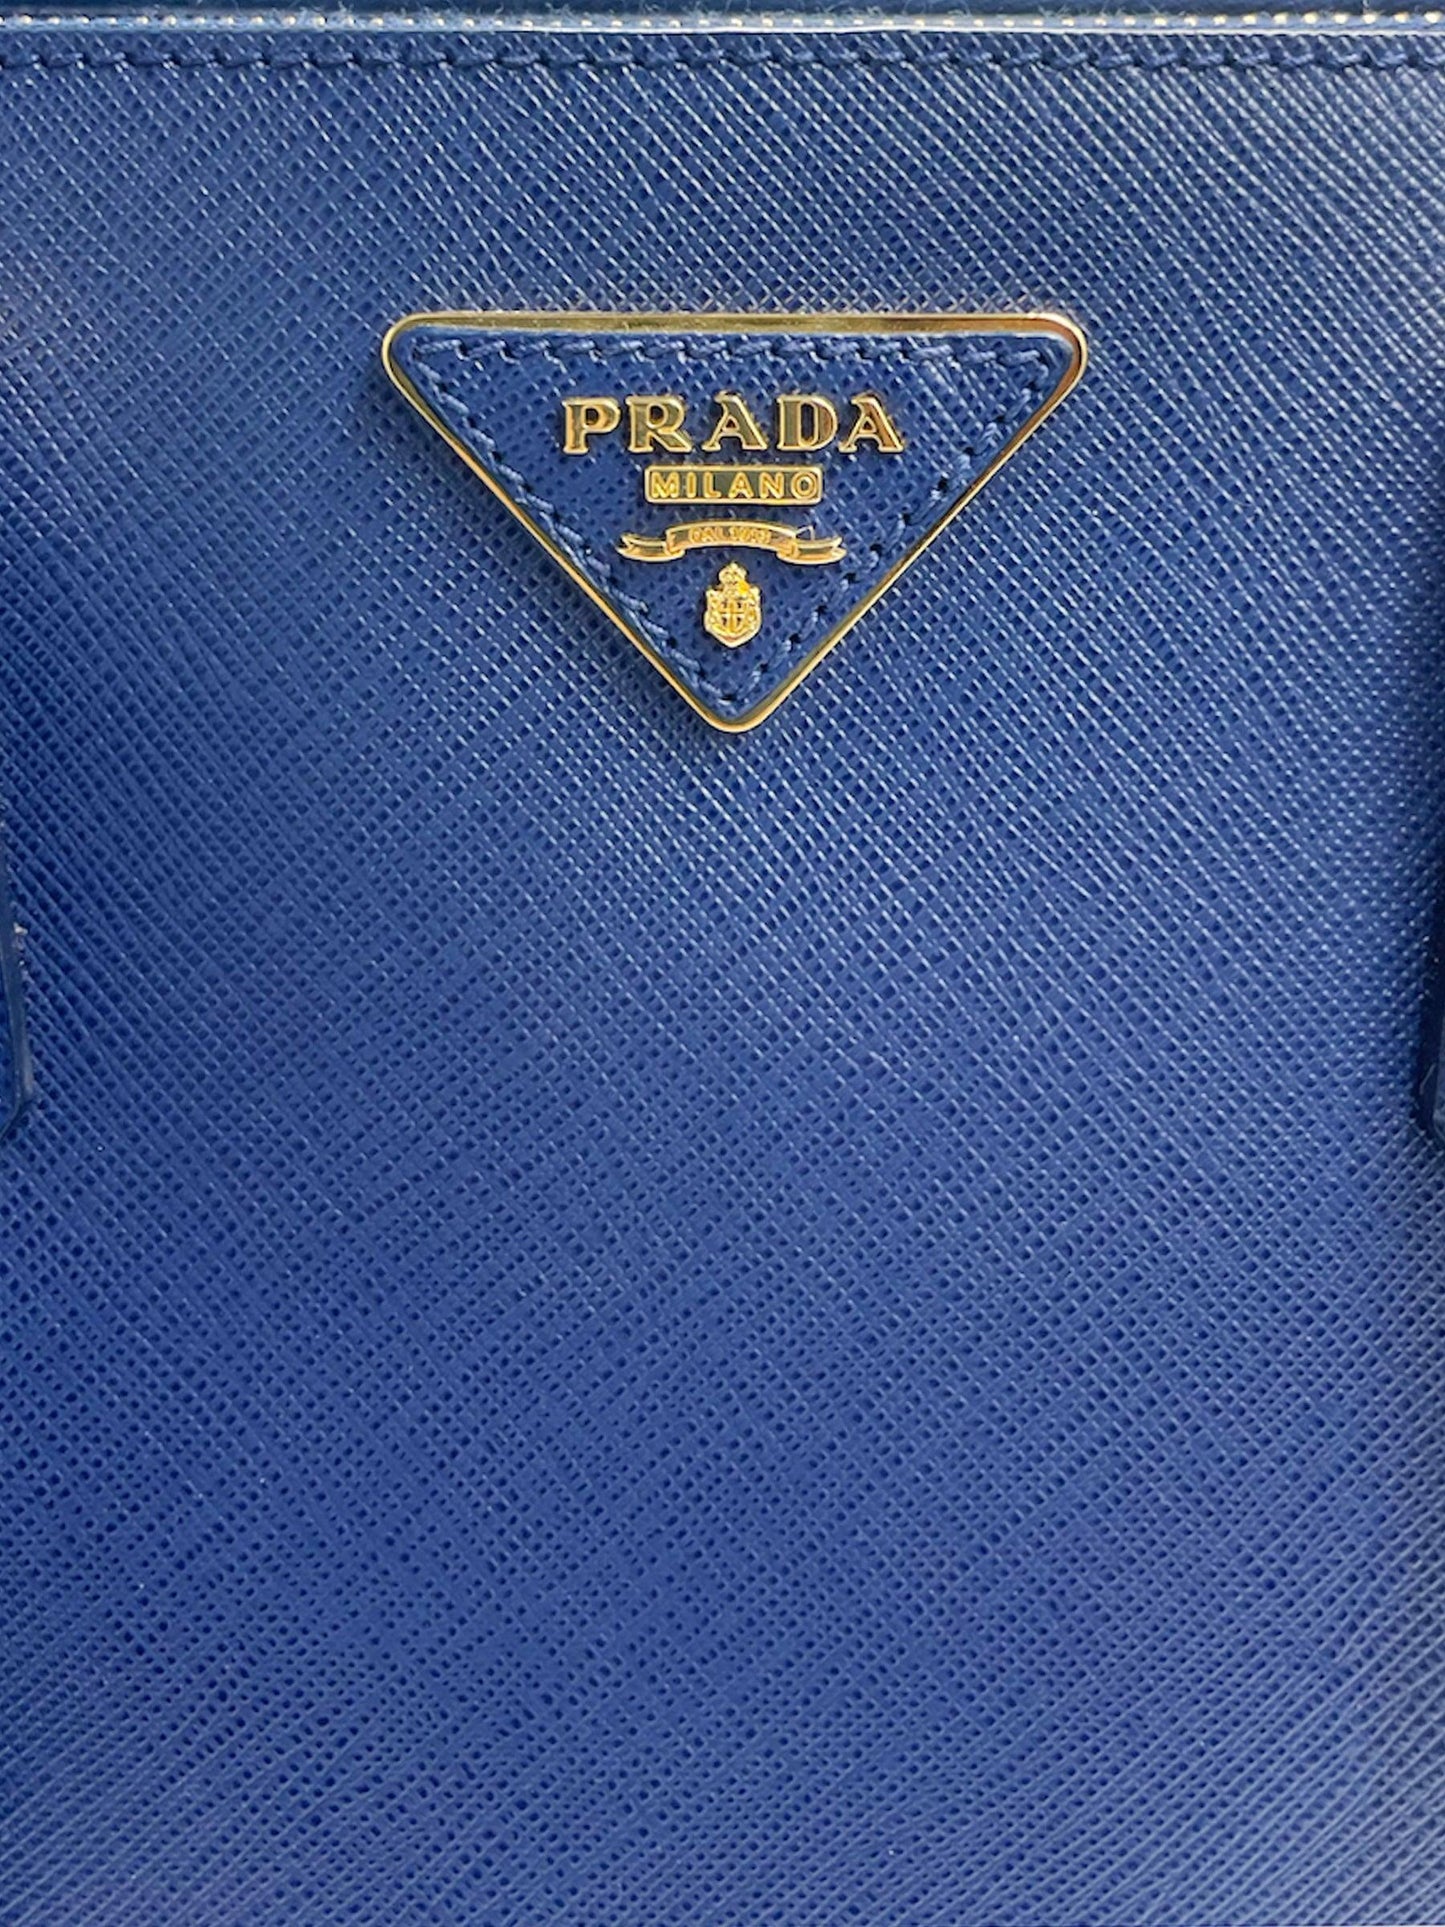 Prada - Second Nature Boutique